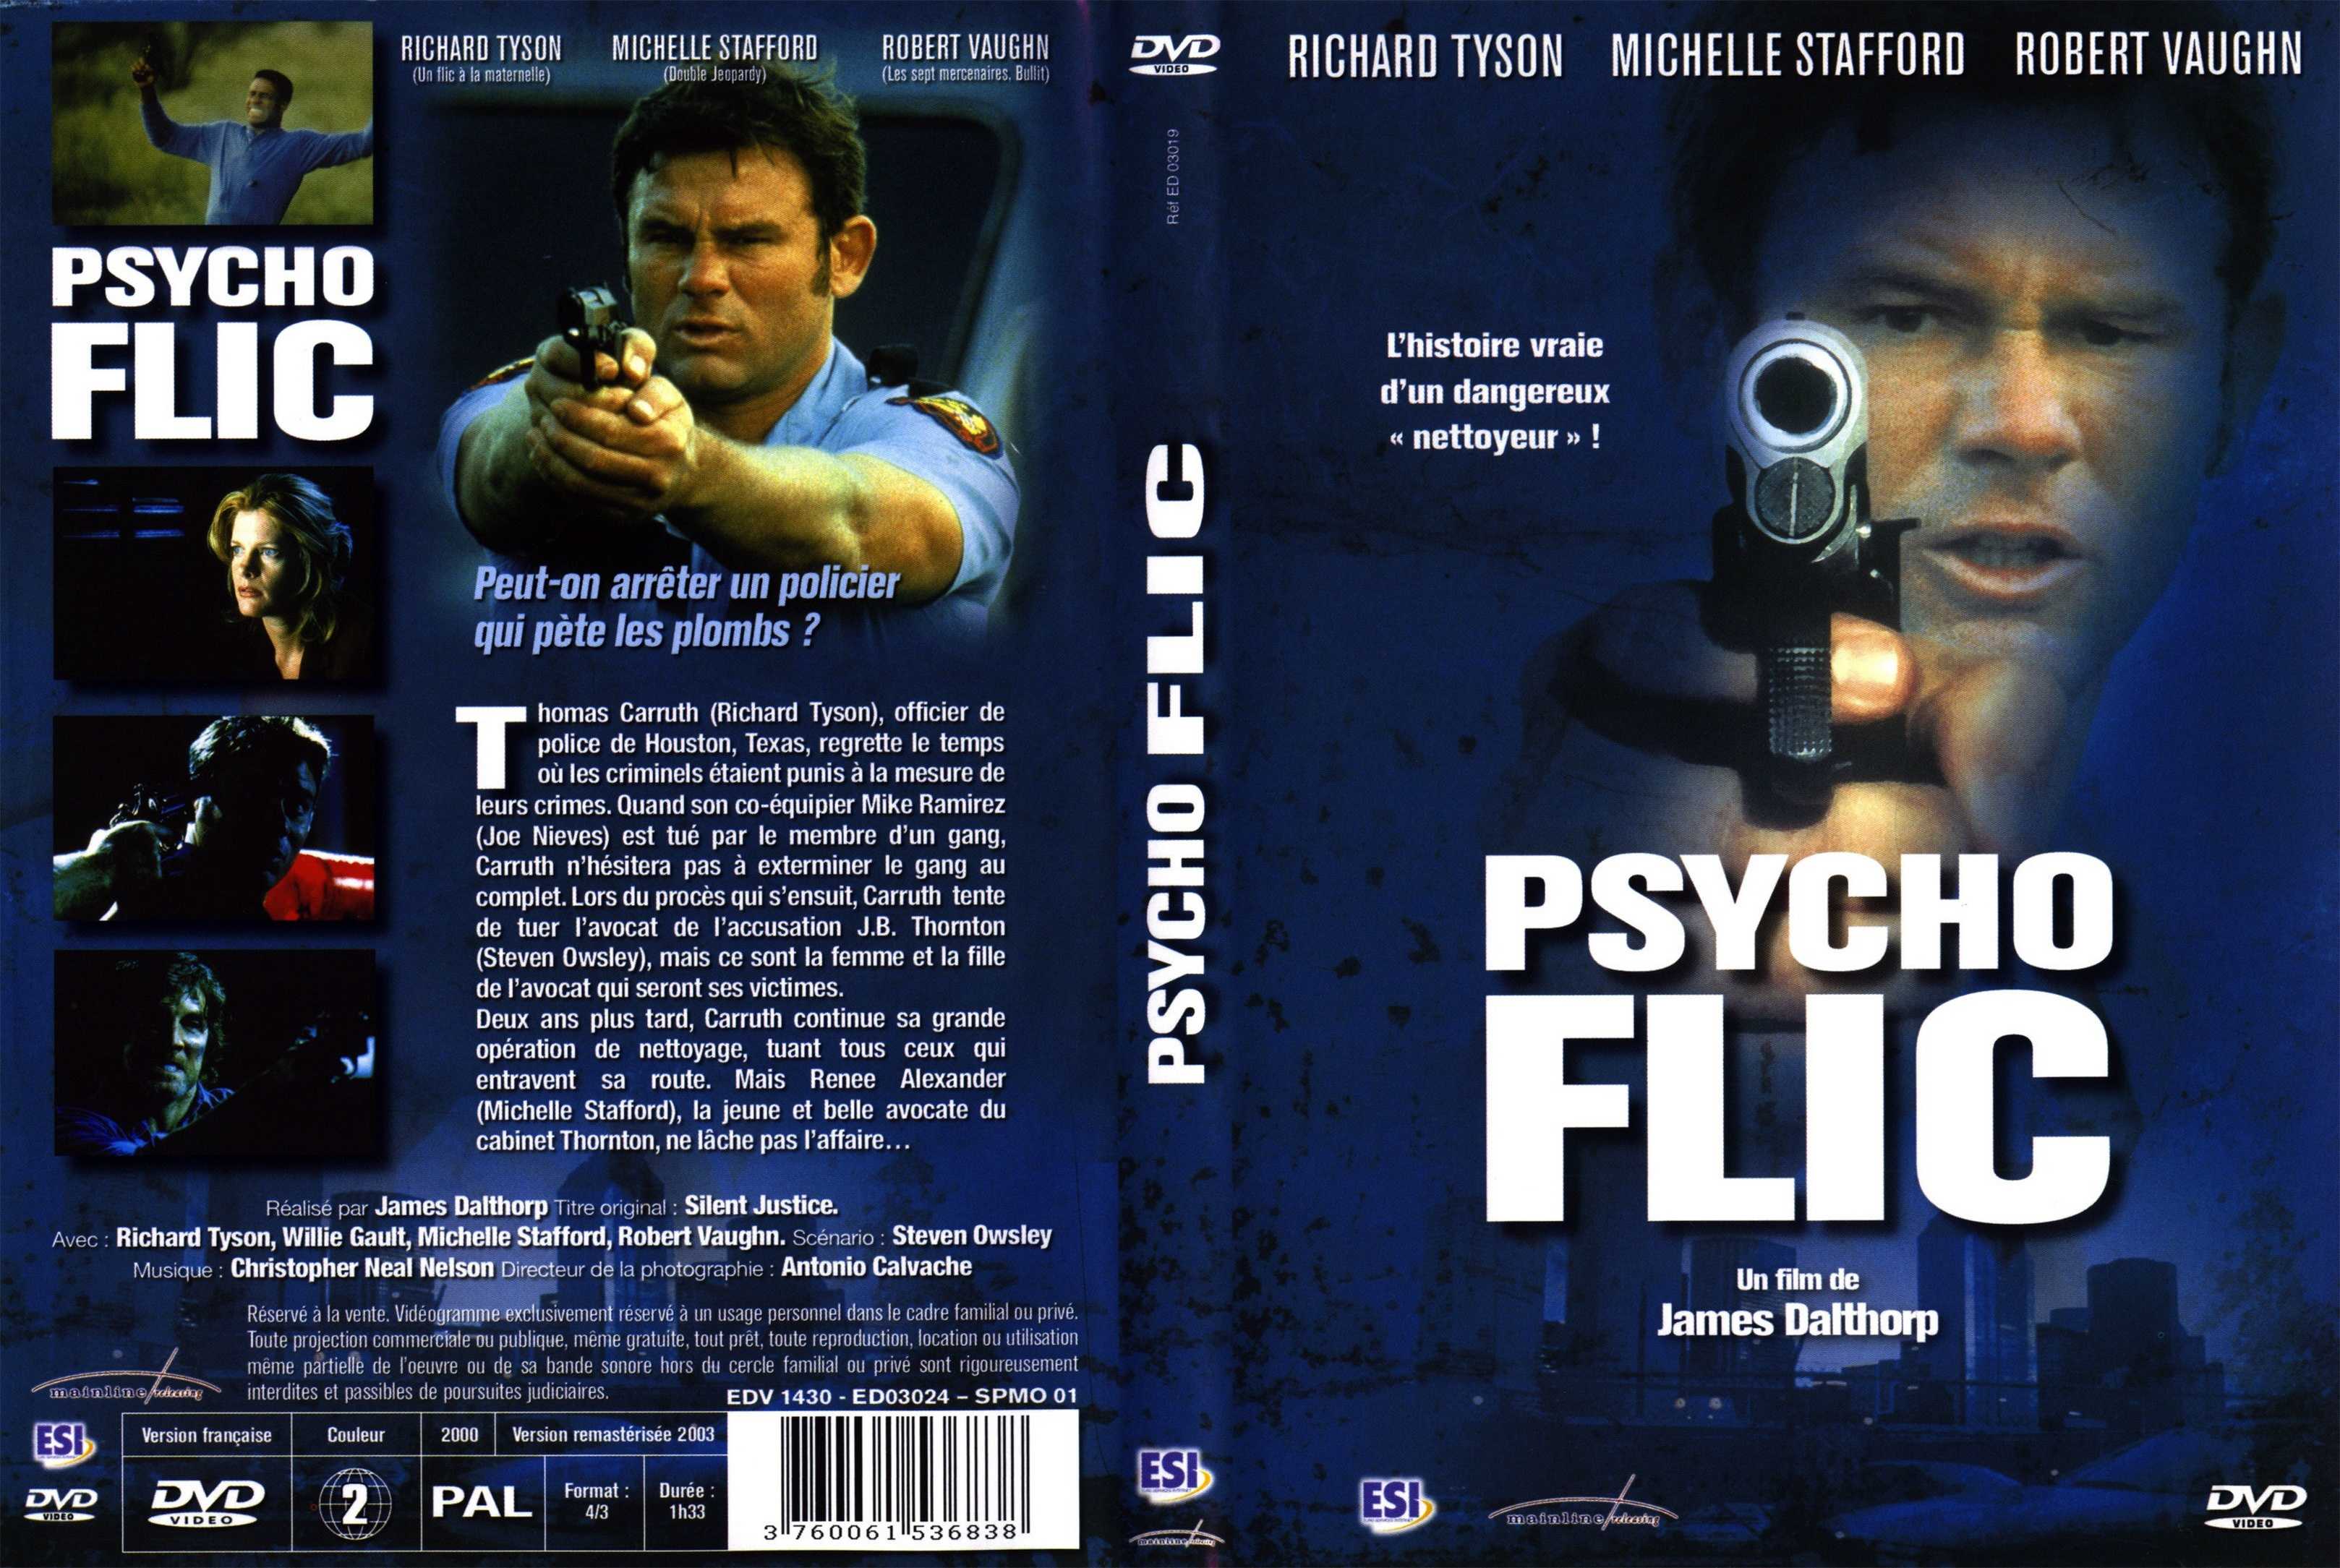 Jaquette DVD Psycho flic